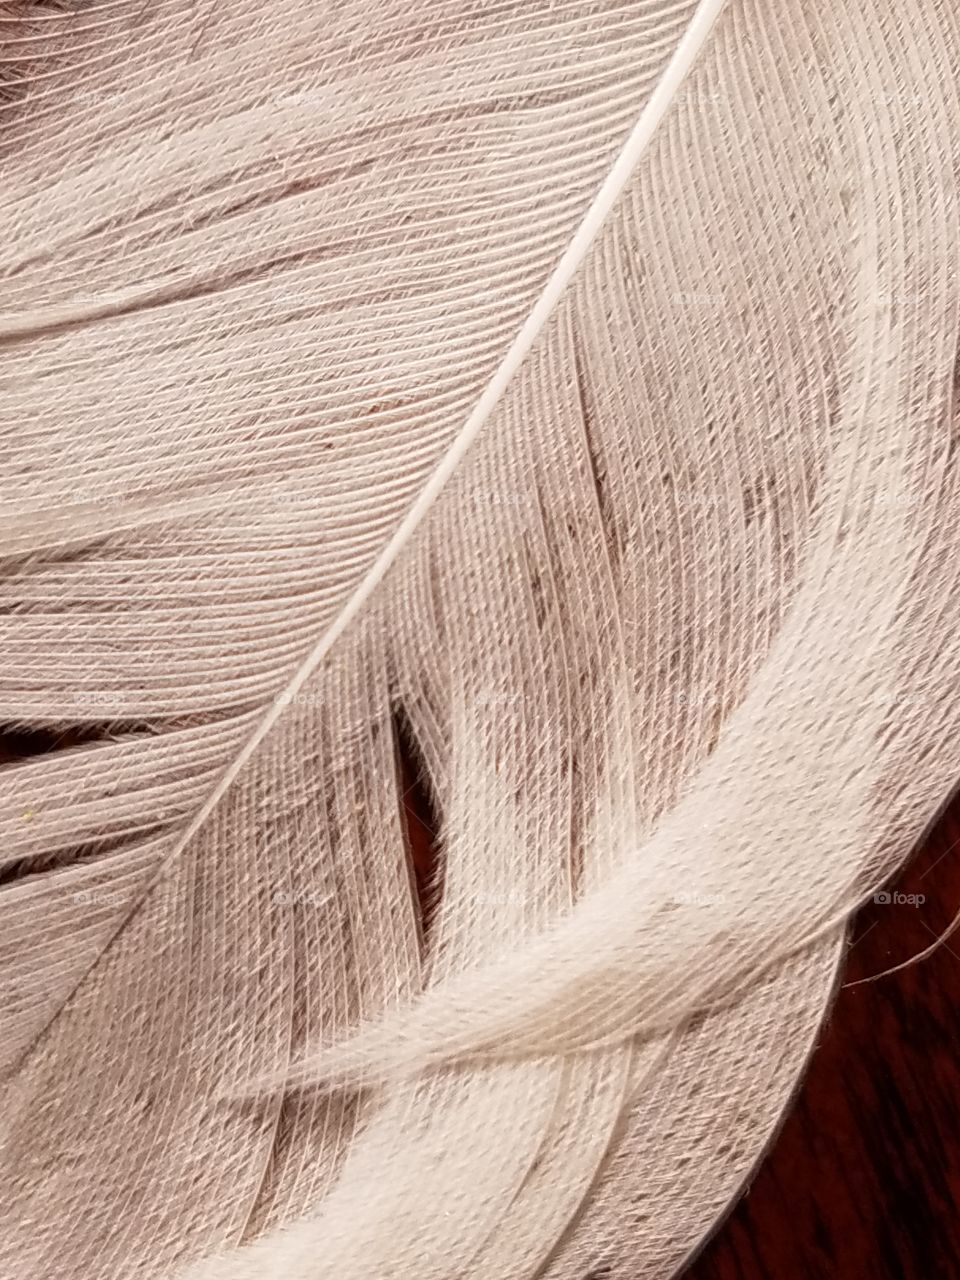 macro of a white feather